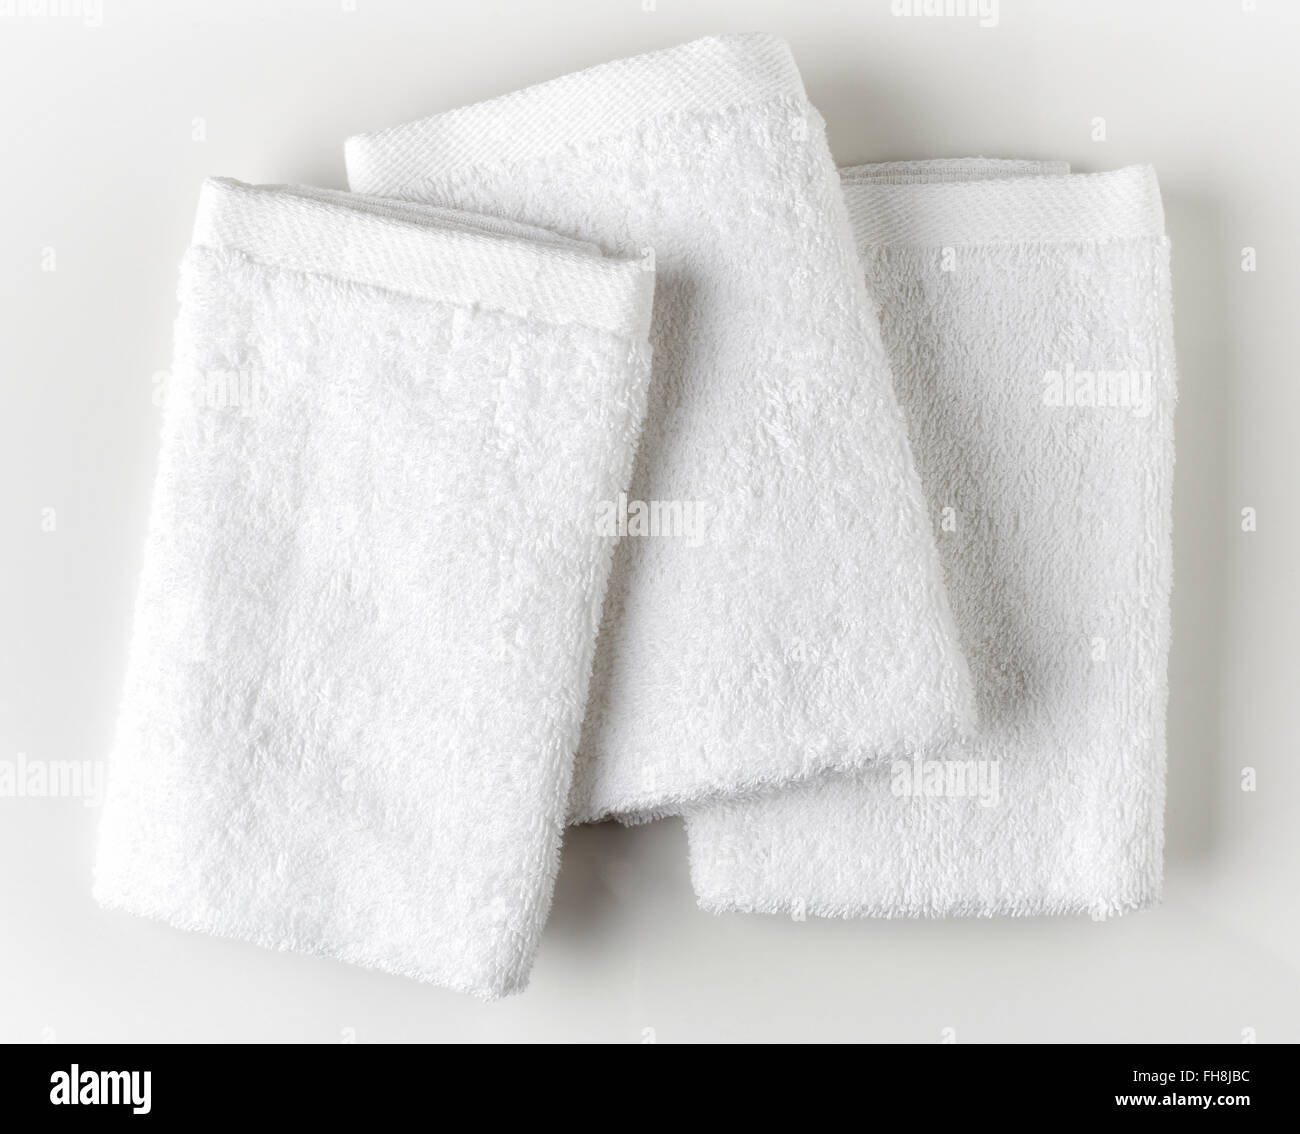 https://c8.alamy.com/comp/FH8JBC/white-spa-towels-top-view-FH8JBC.jpg